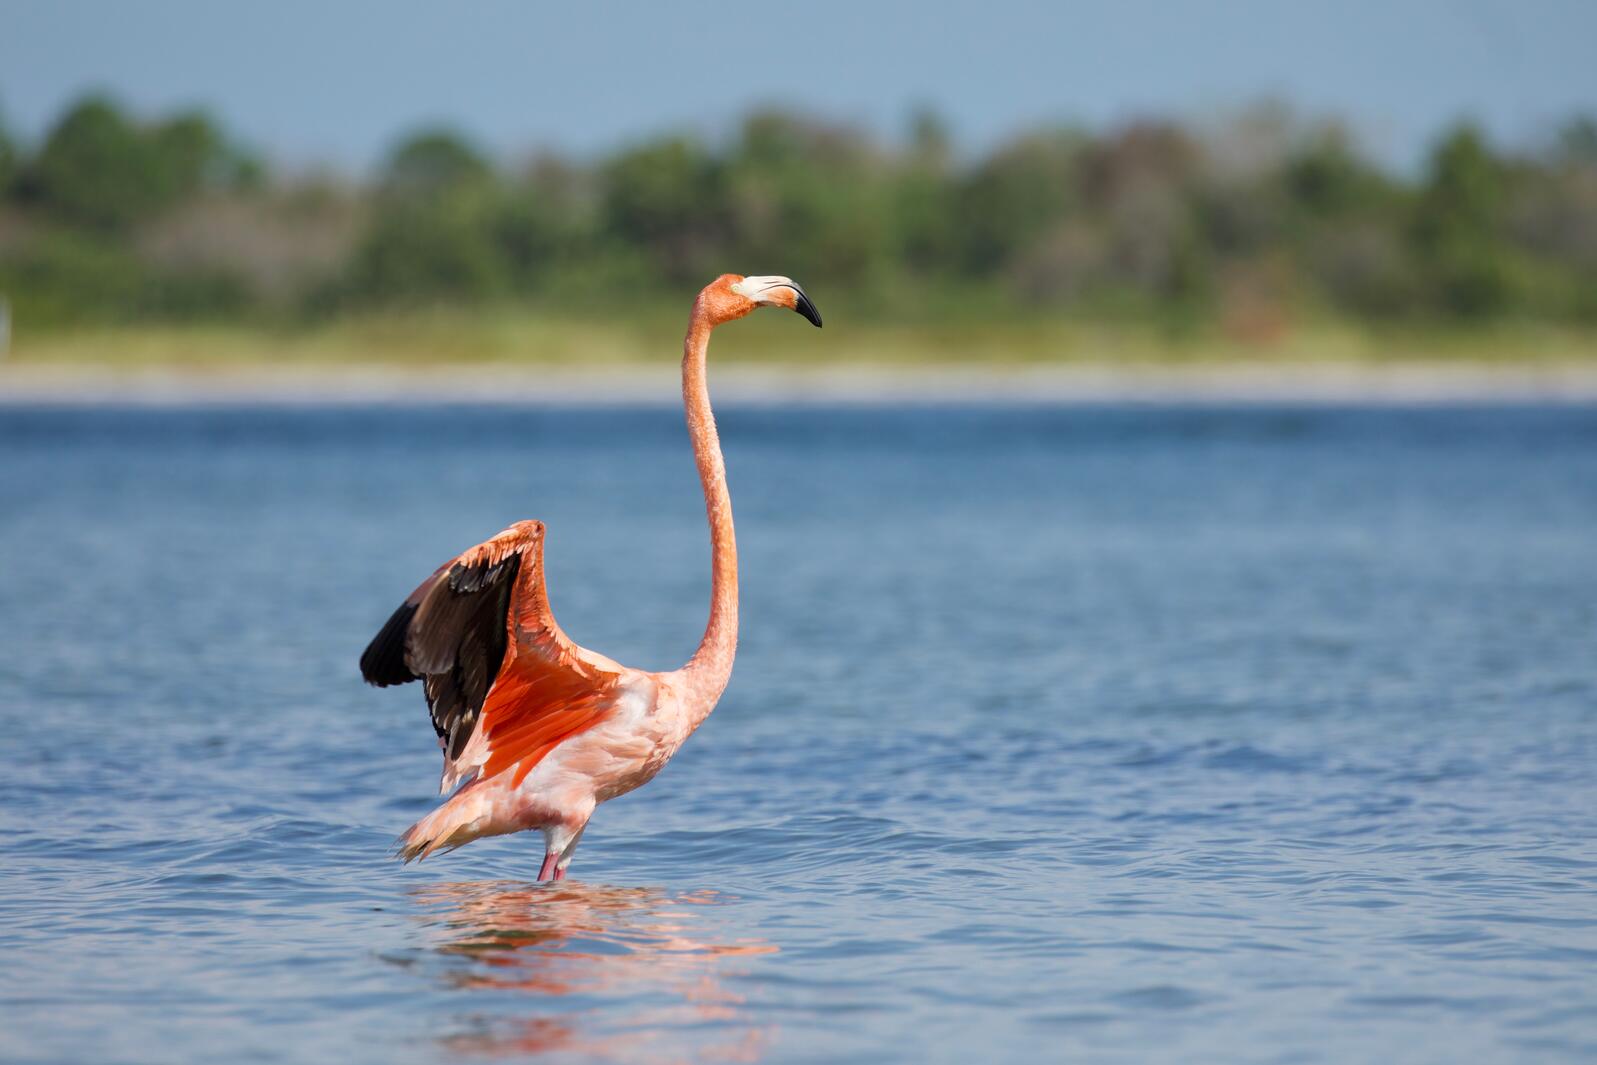 An American Flamingo walking in shallow water.